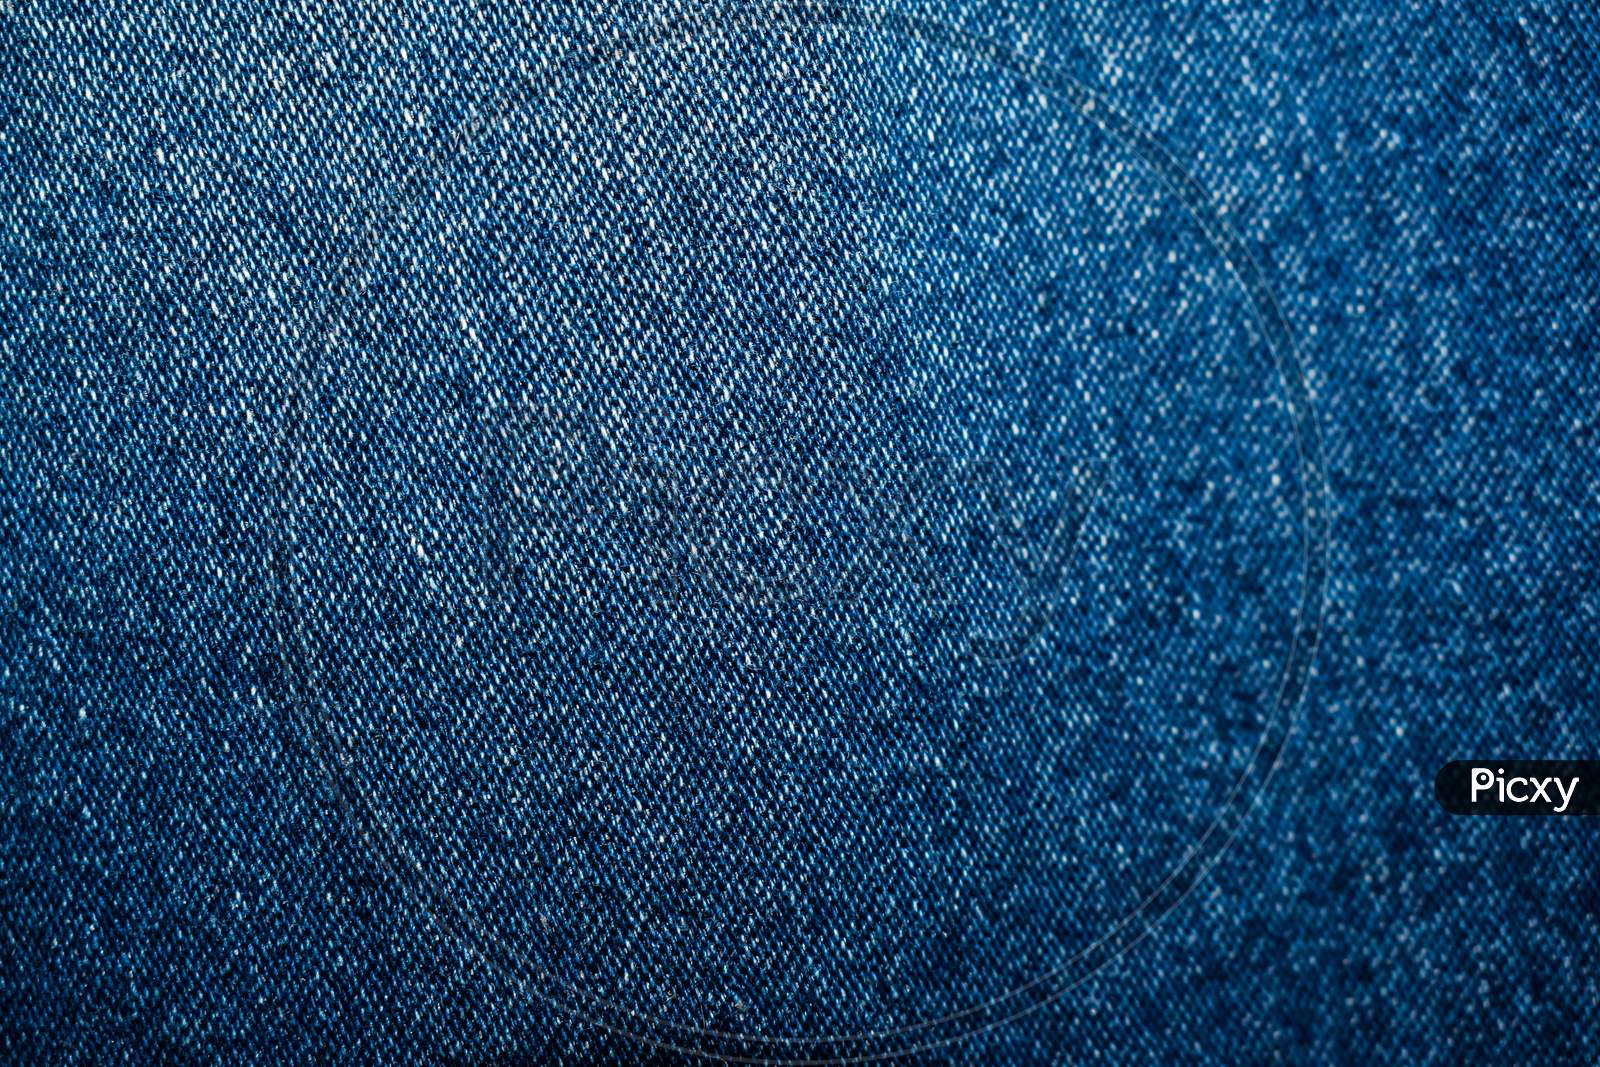 Blue Denim Jeans Texture.Denim Background Texture For Design. Image For Background. Selective Focus Applied.